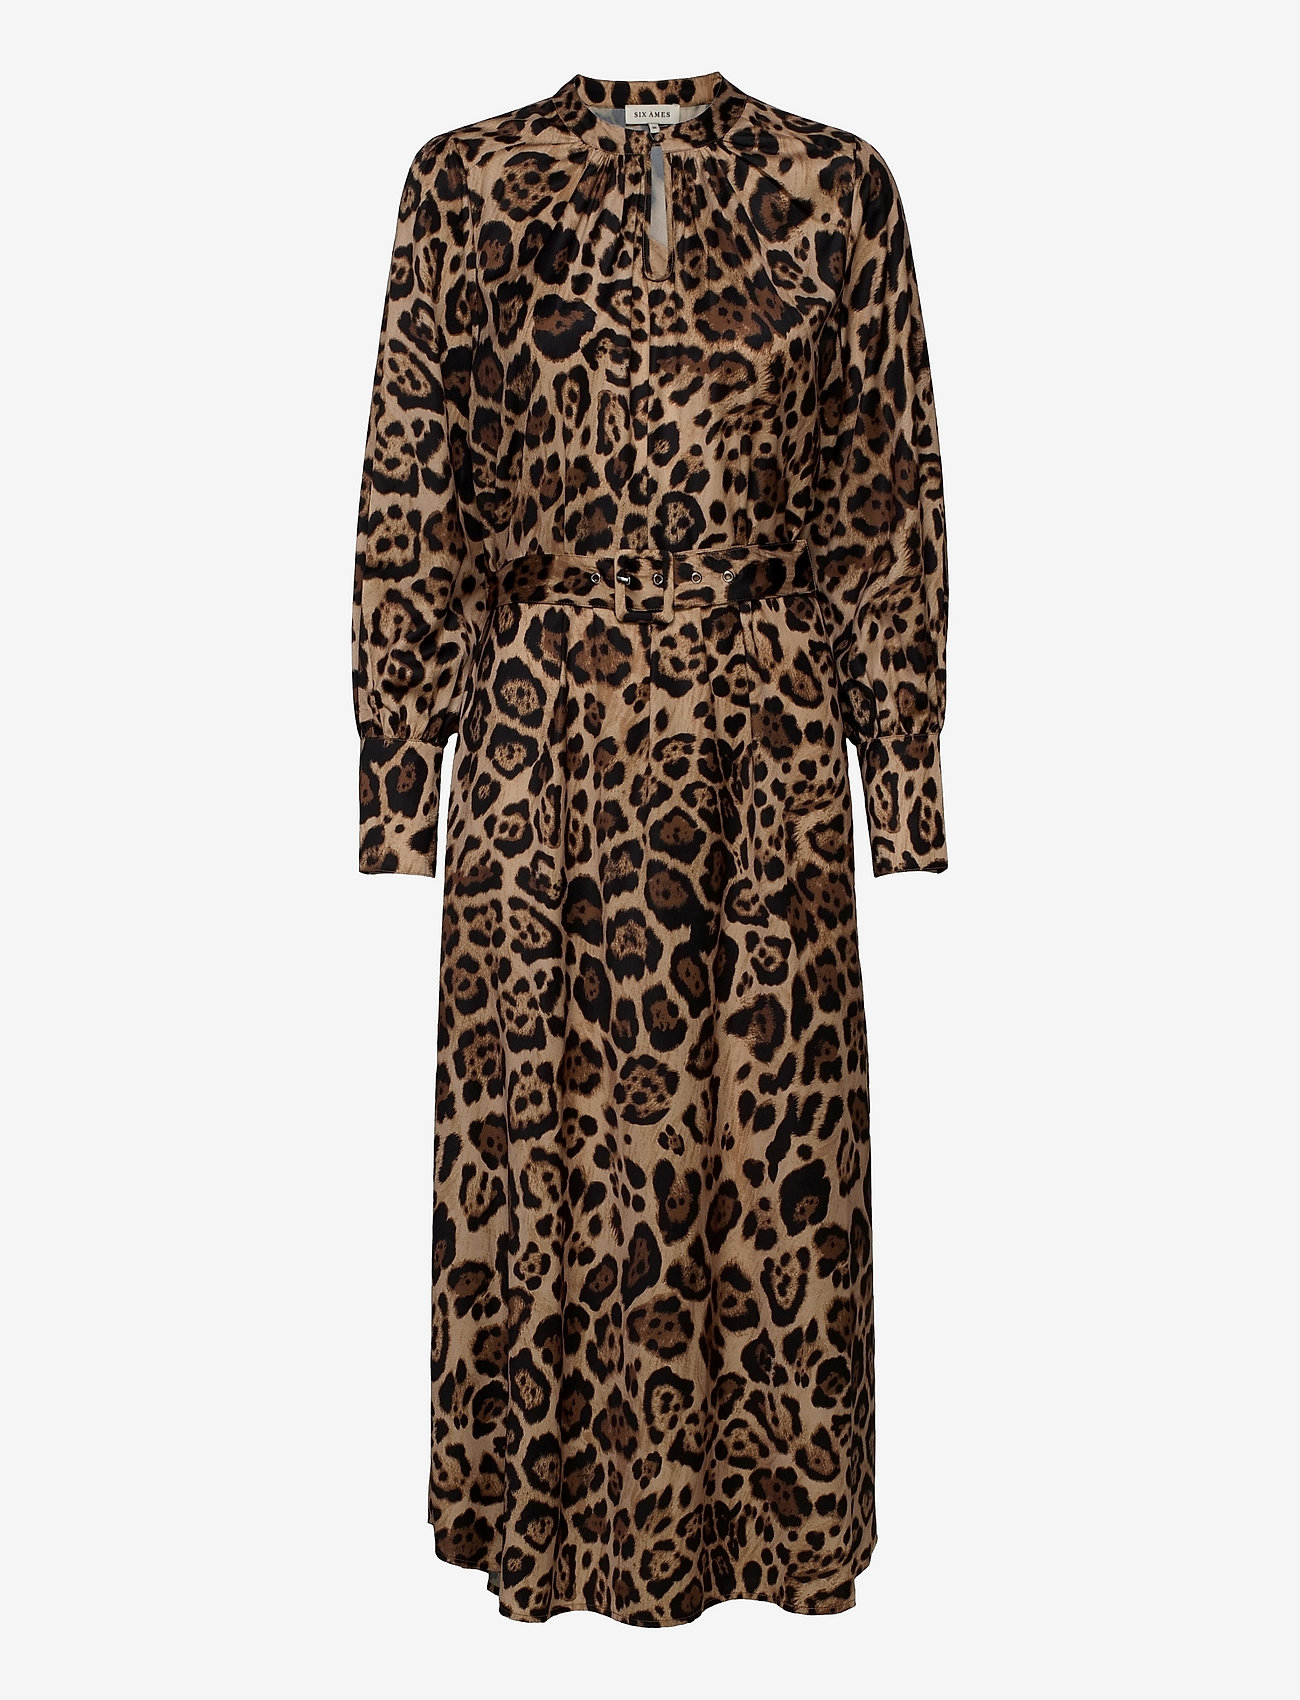 Six Ames - SANDRA - midi kjoler - leopard - 0